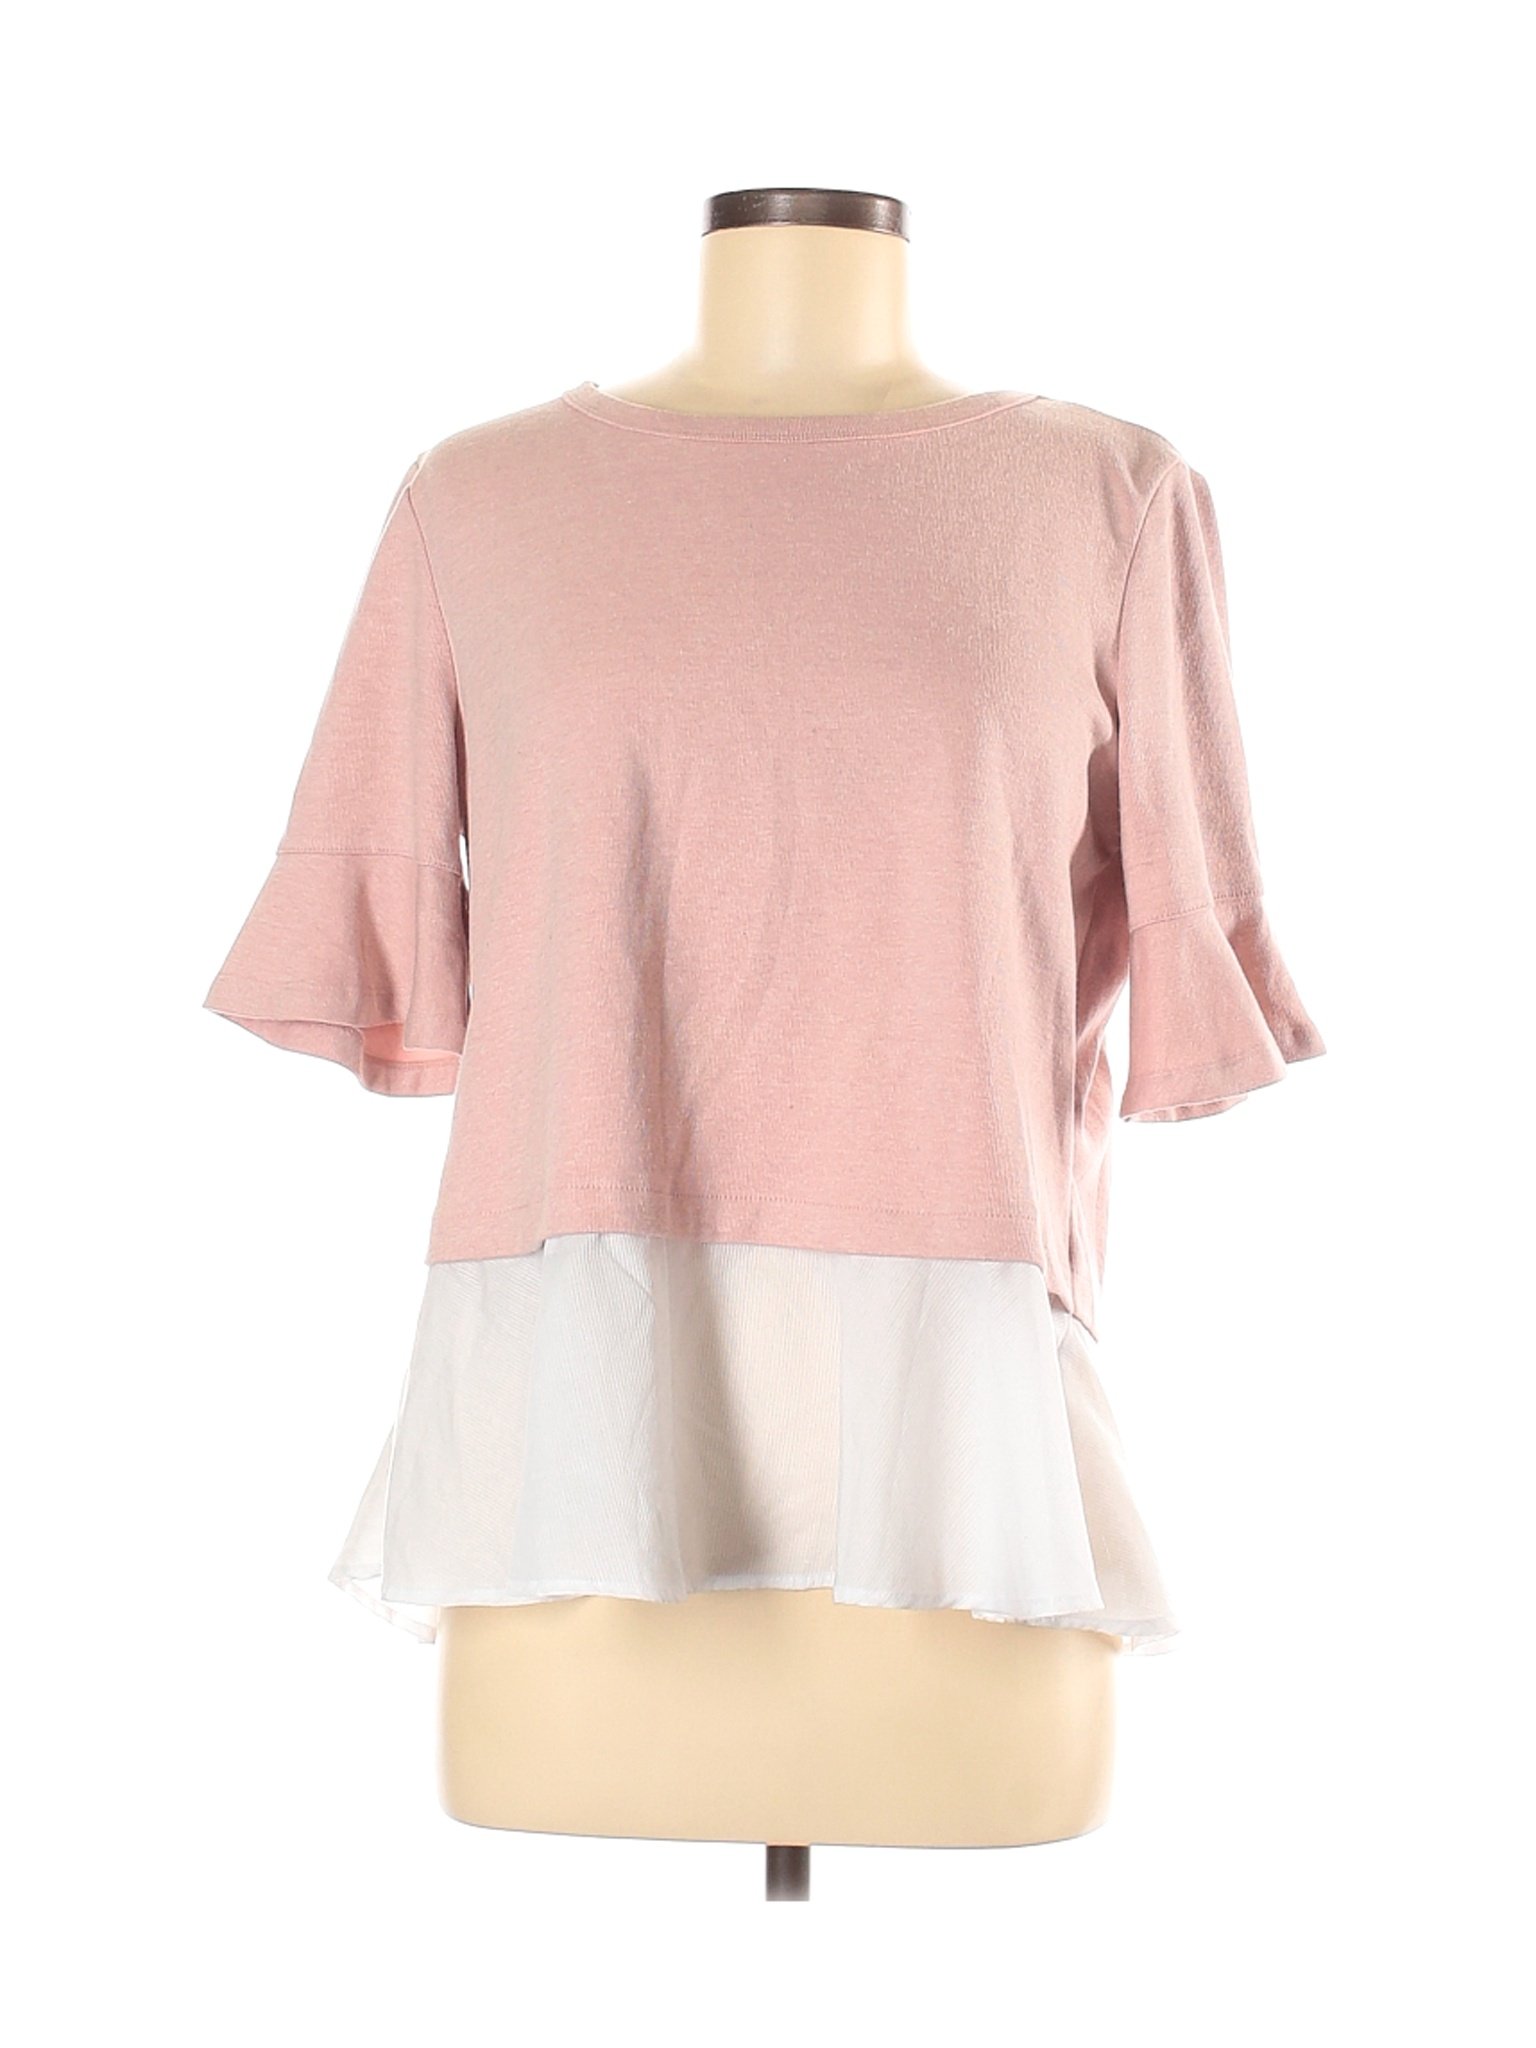 Jane and Delancey Women Pink Short Sleeve Top M | eBay